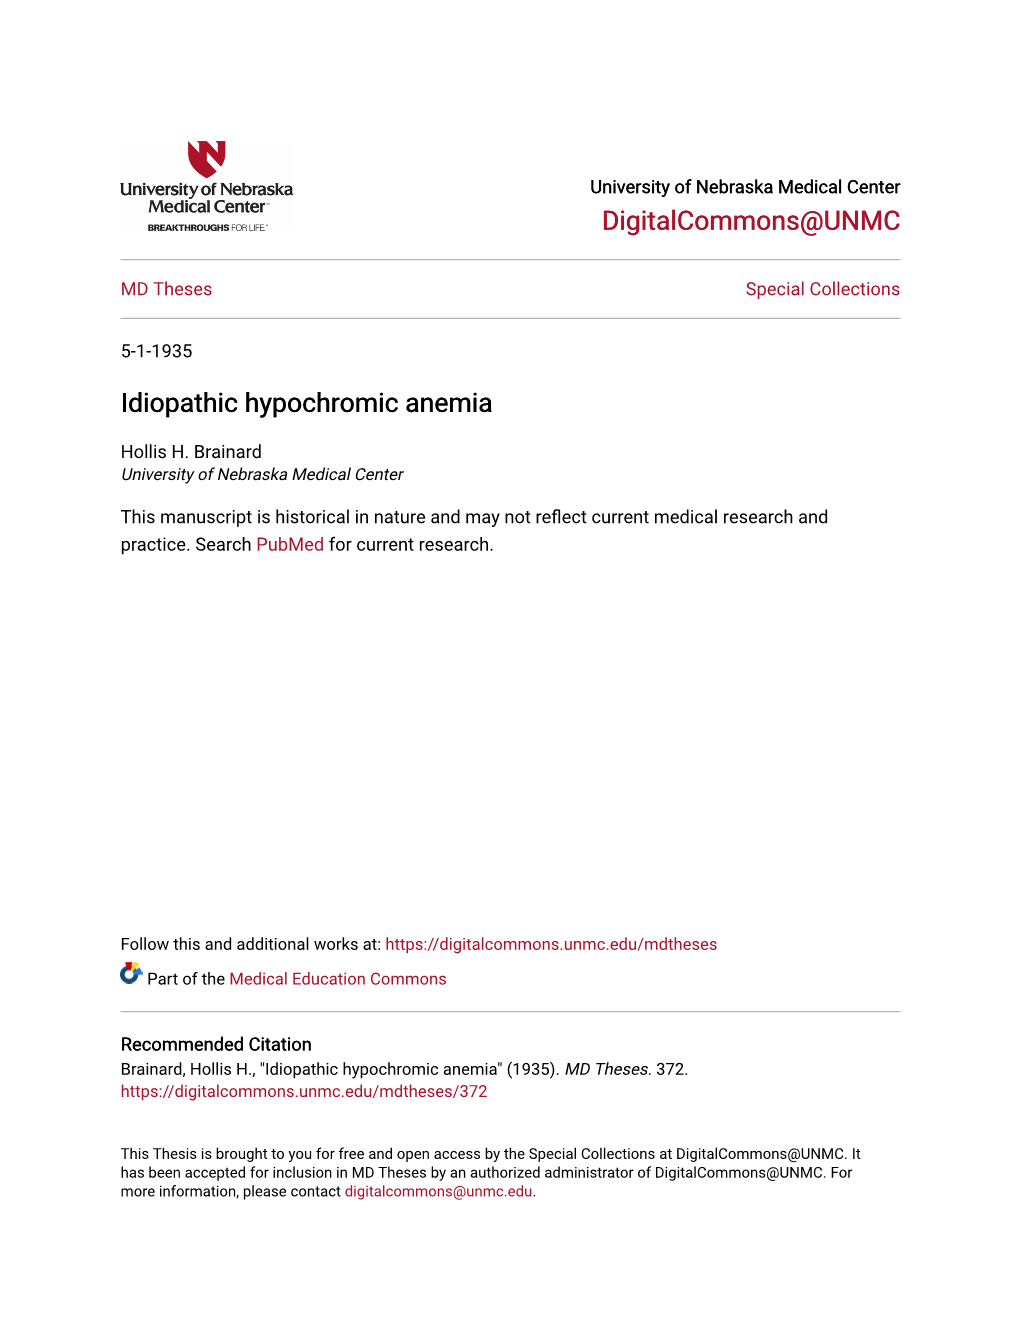 Idiopathic Hypochromic Anemia